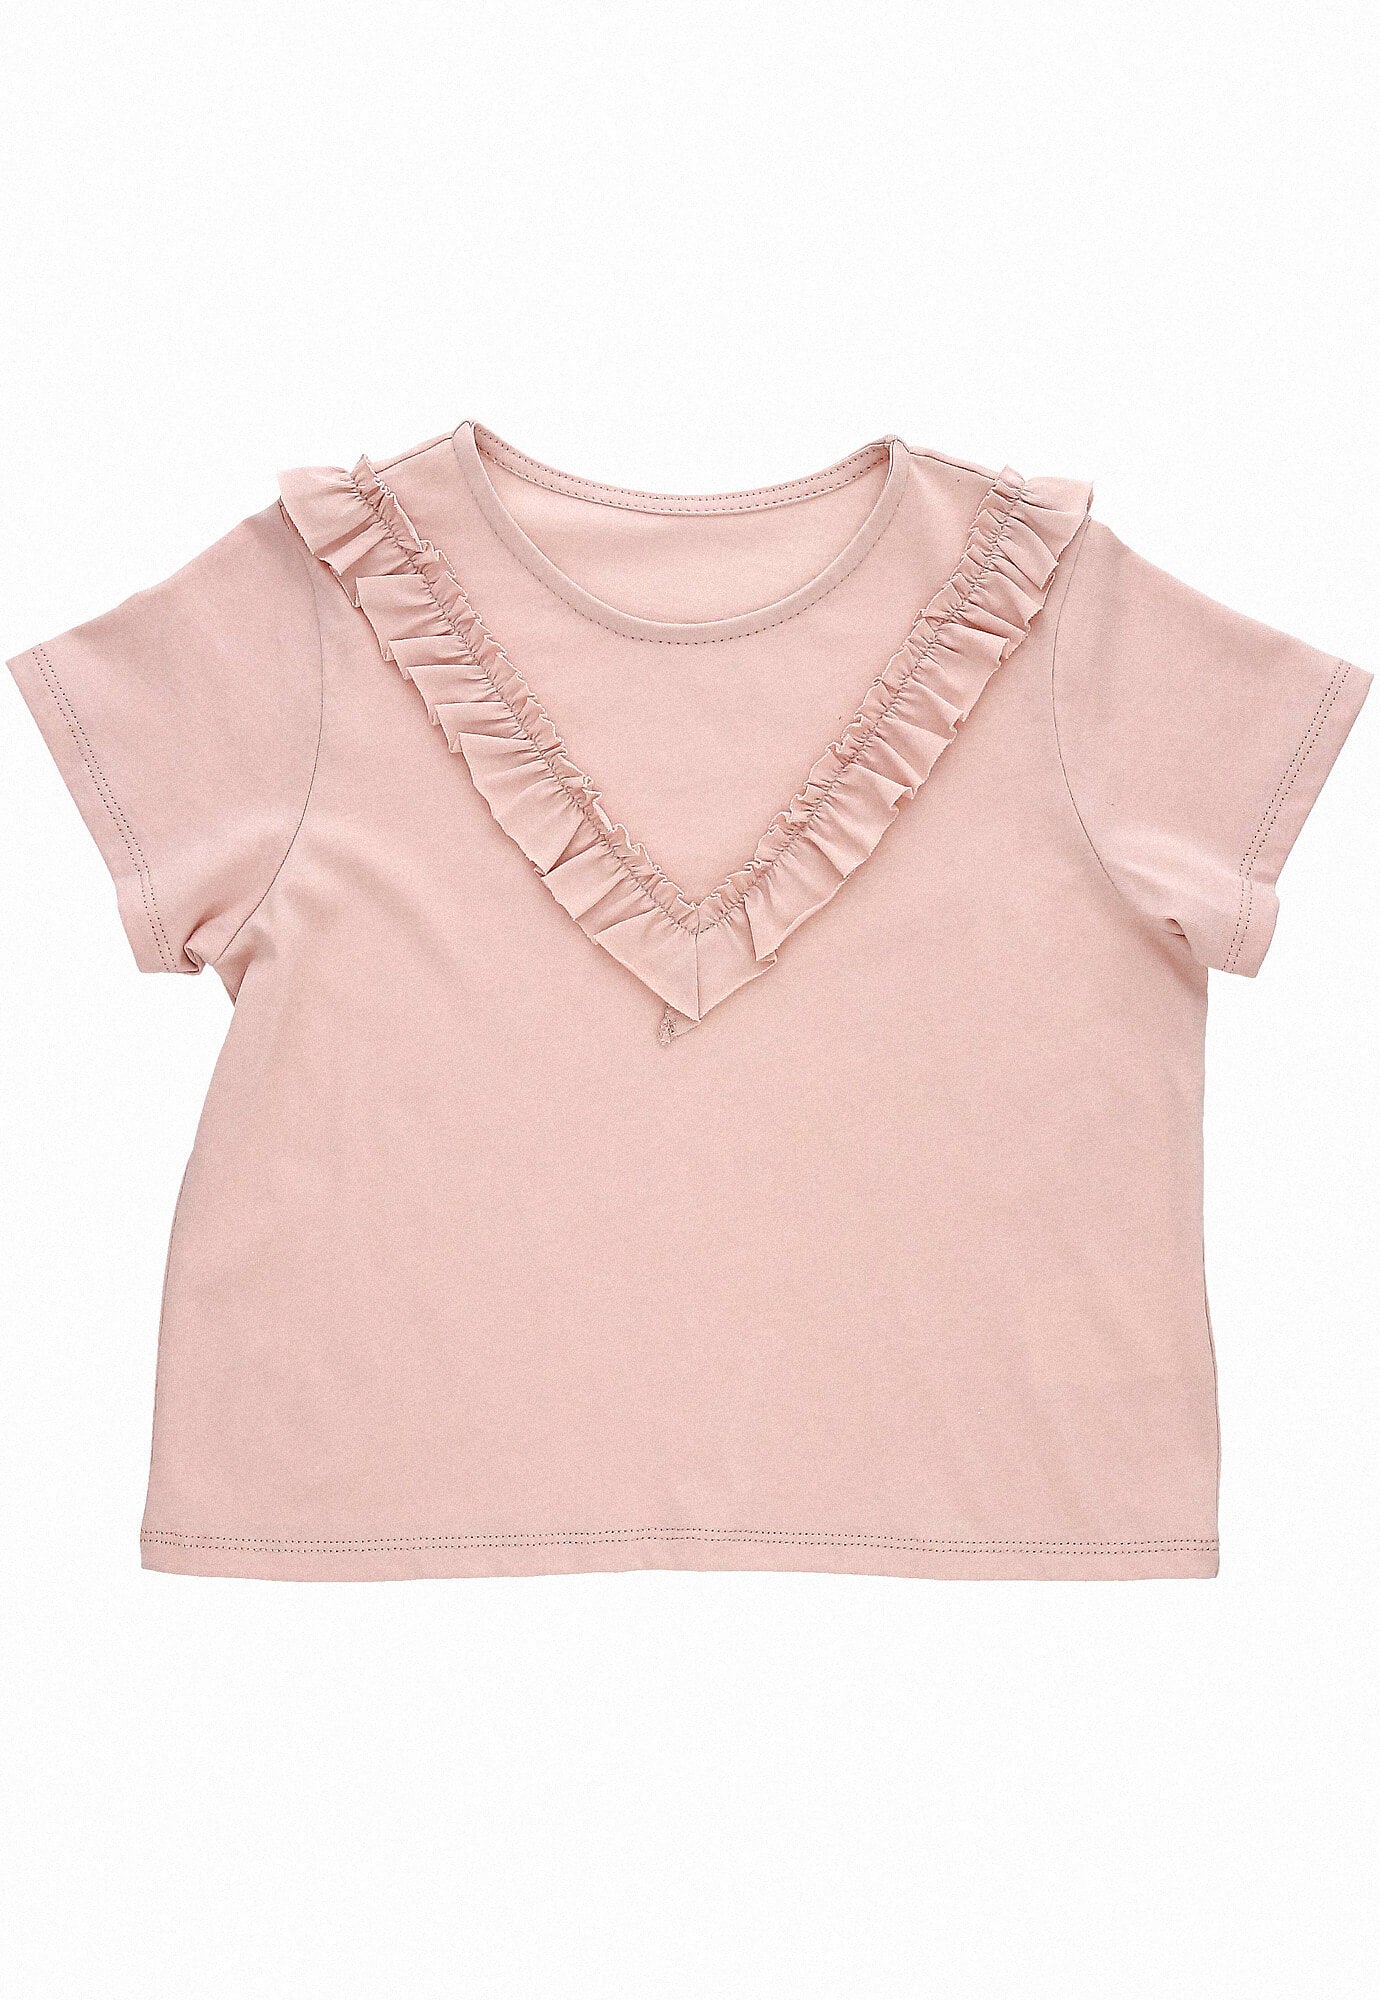 Camiseta rosado claro fondo entero, bolero sobrepuesto y manga corta para bebé niña